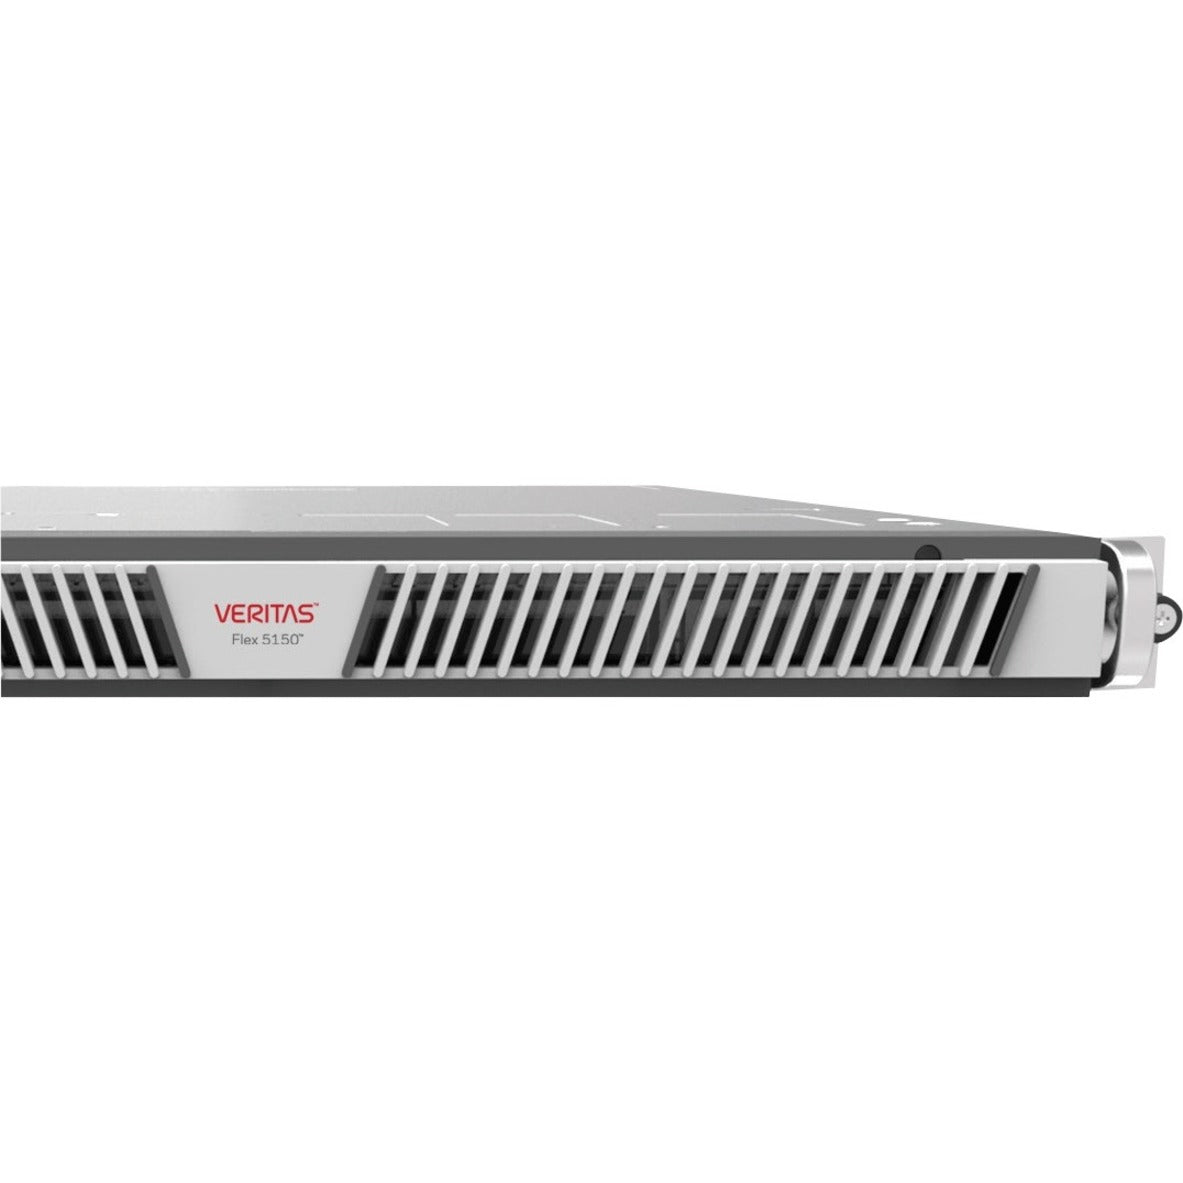 Veritas 26118-M4211 Flex System 5150 NAS Storage System, 15TB Total Hard Drive Capacity Installed, 12Gb/s SAS Controller, 8 Network (RJ-45) Ports, Rack-mountable